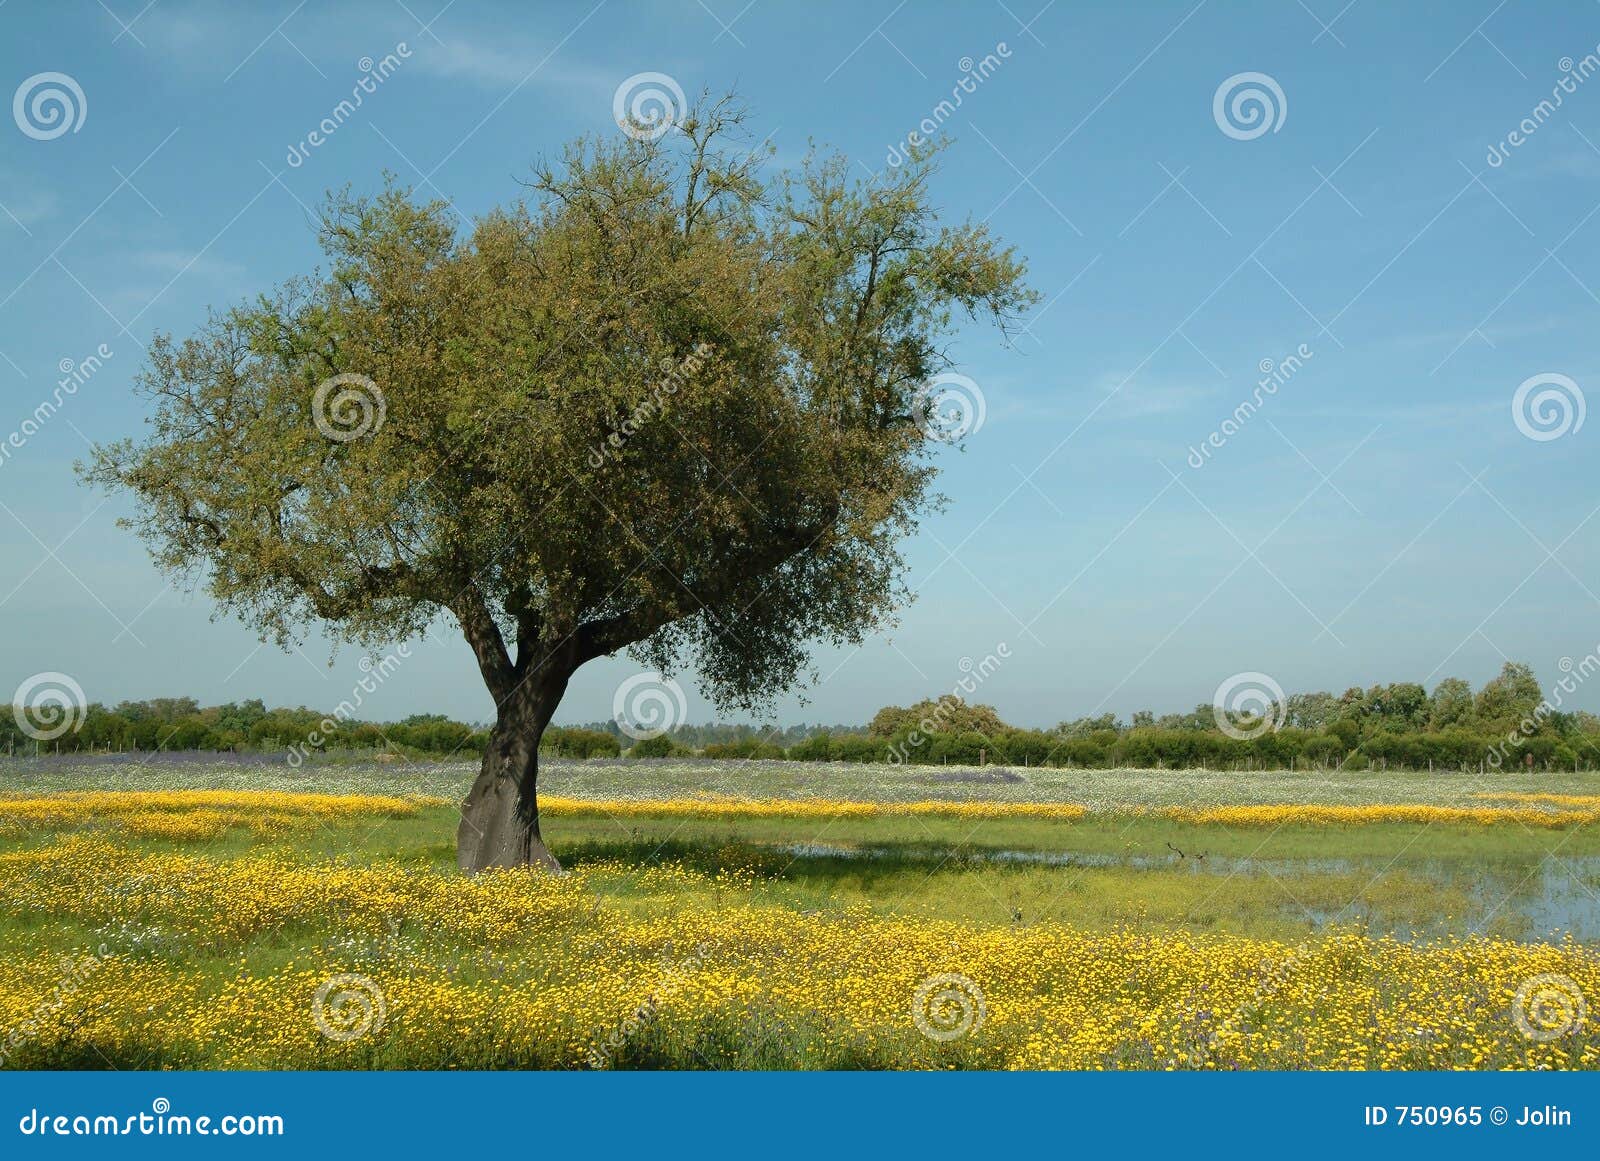 tree in flowery field, springtime